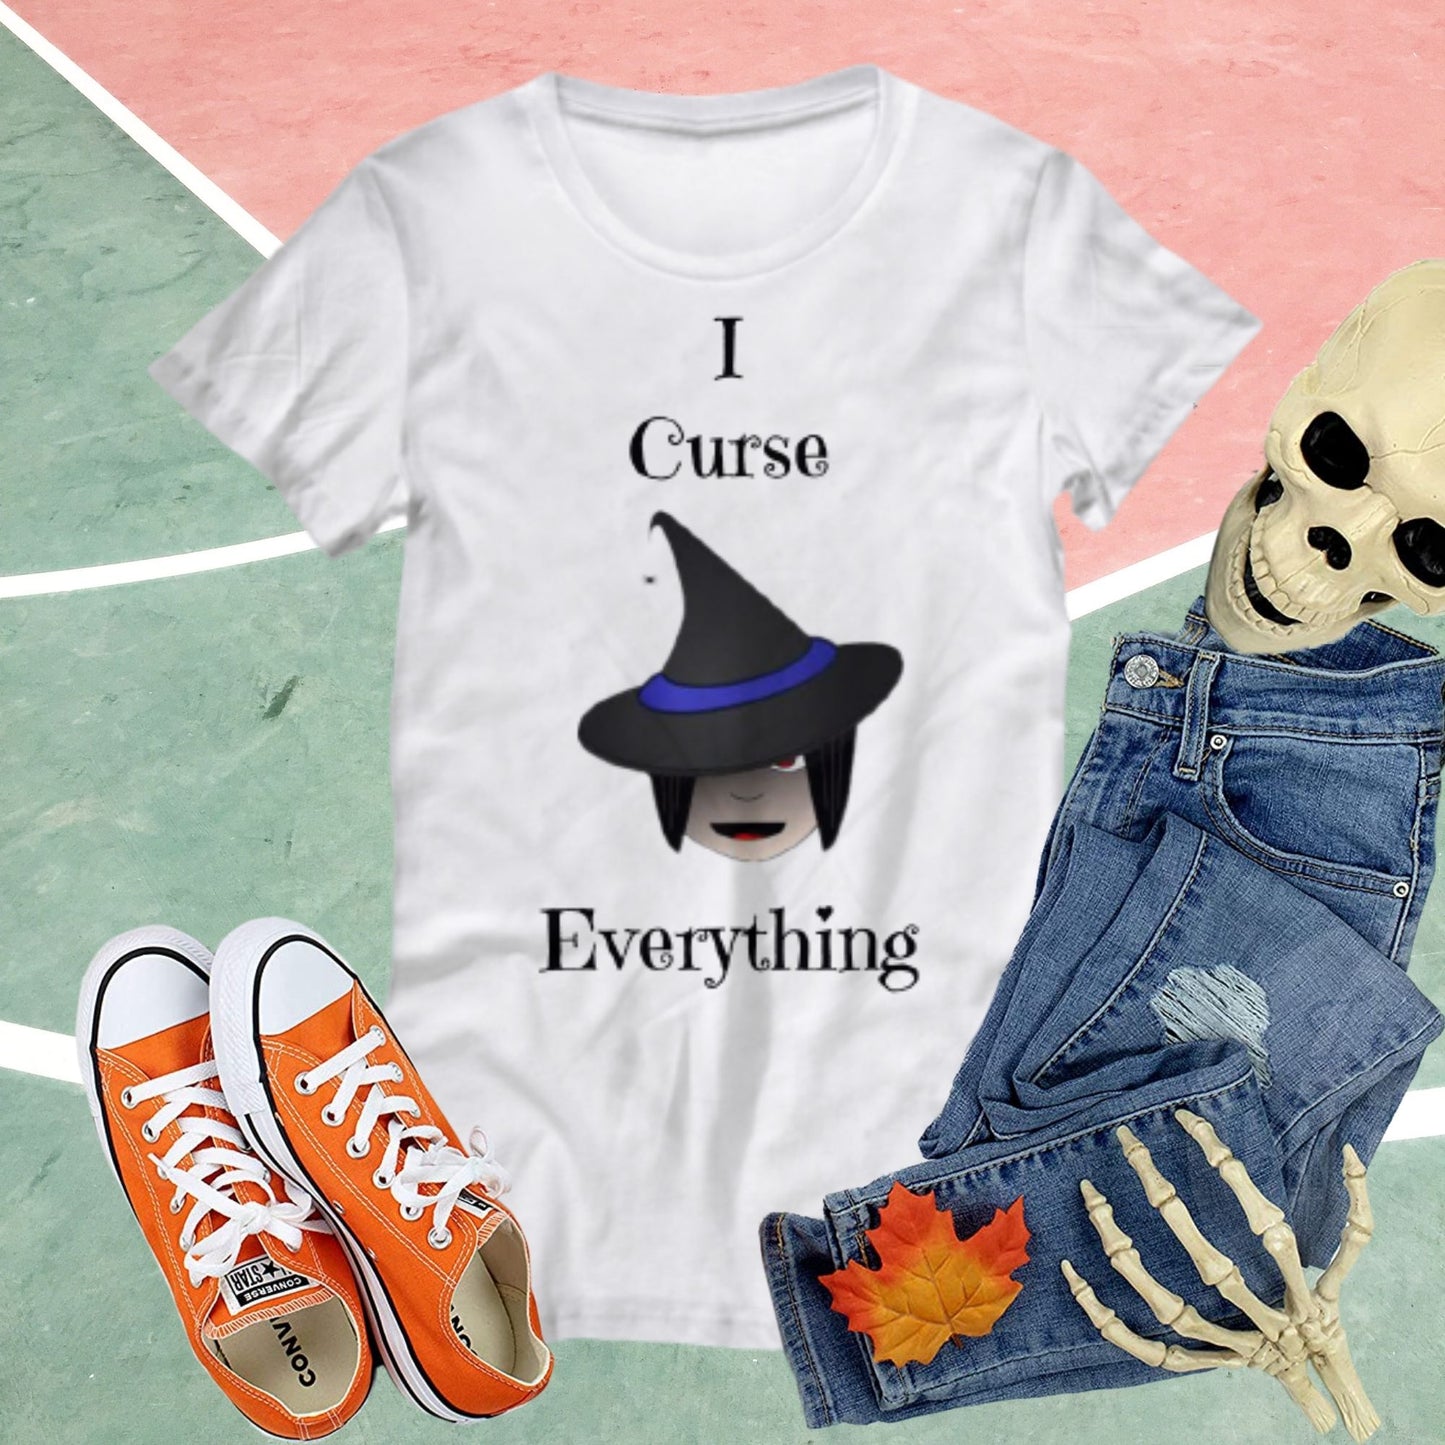 Novelty T-Shirt-Women's- I Curse Everything- Halloween Shirt-Funny Gift For Women Friends